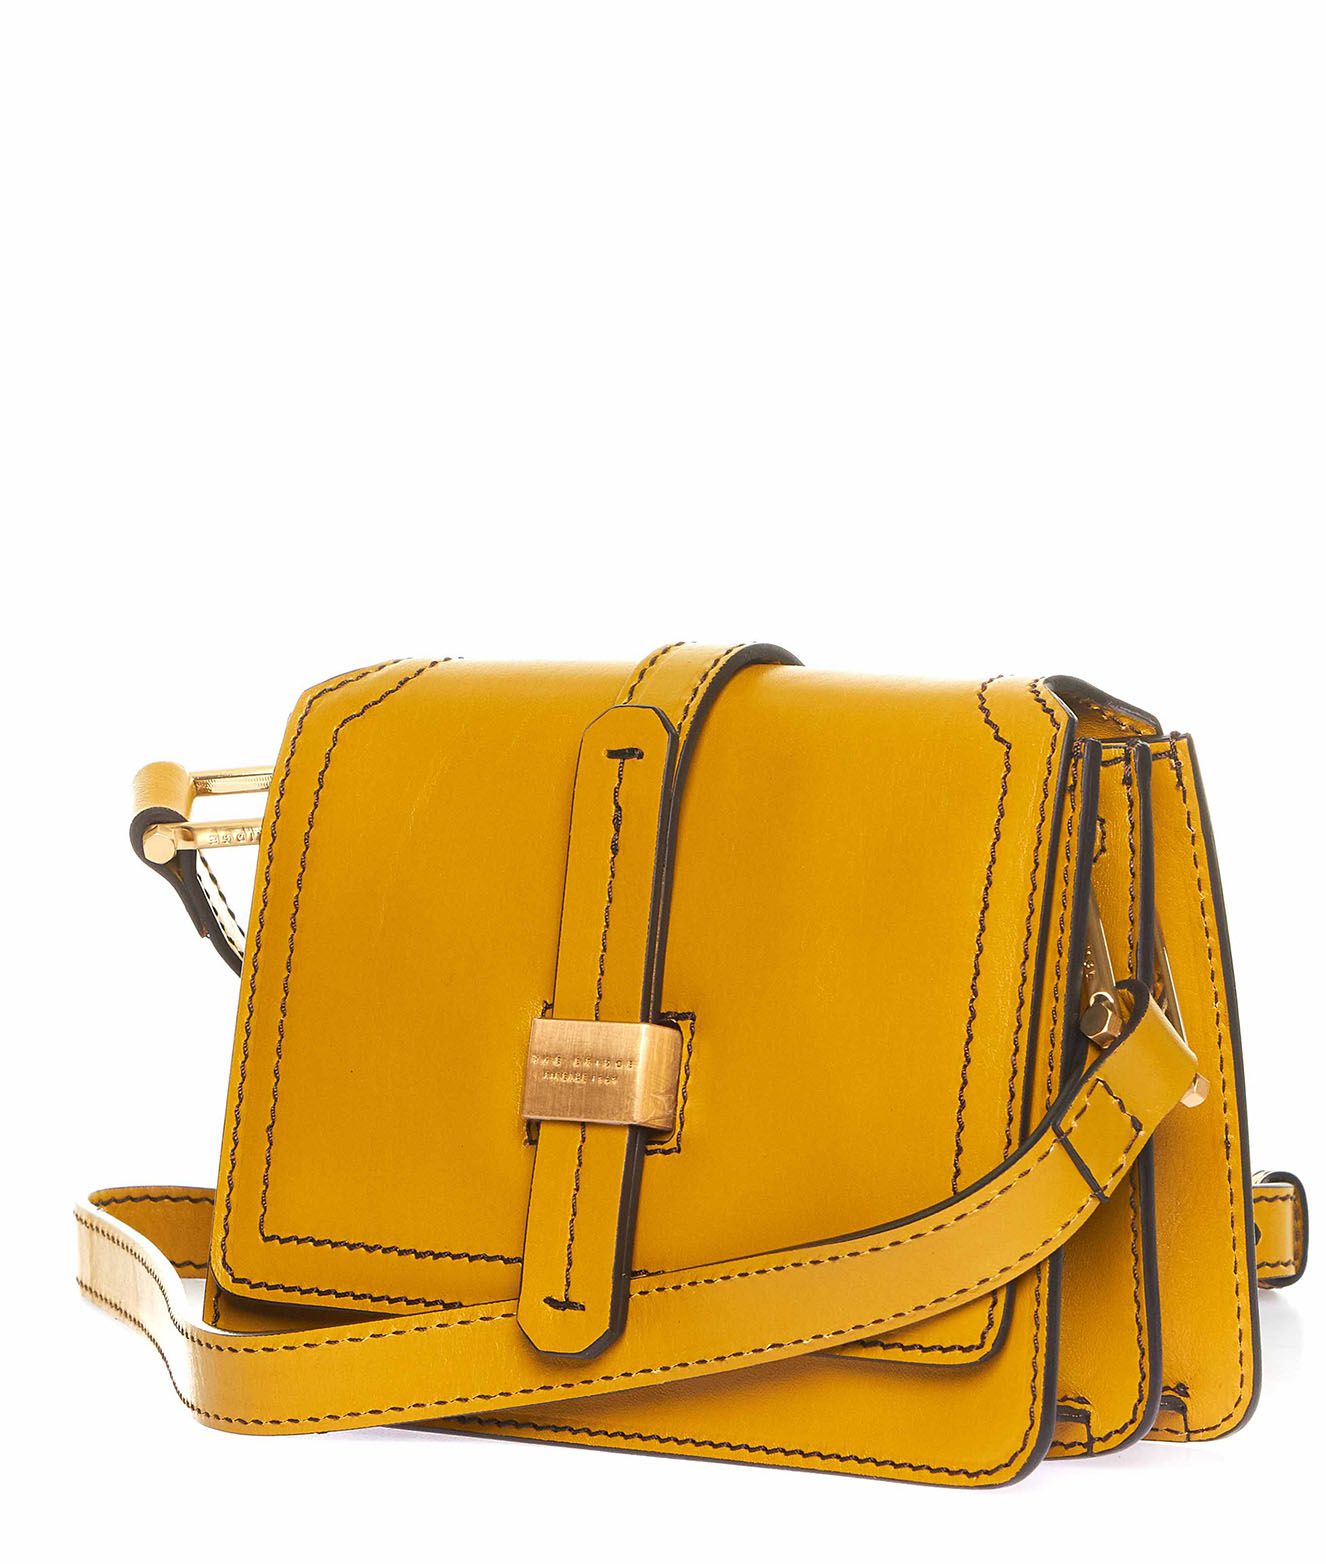 THE BRIDGE Women's Bags Cross Body Yellow Leather NIB Authentic | eBay